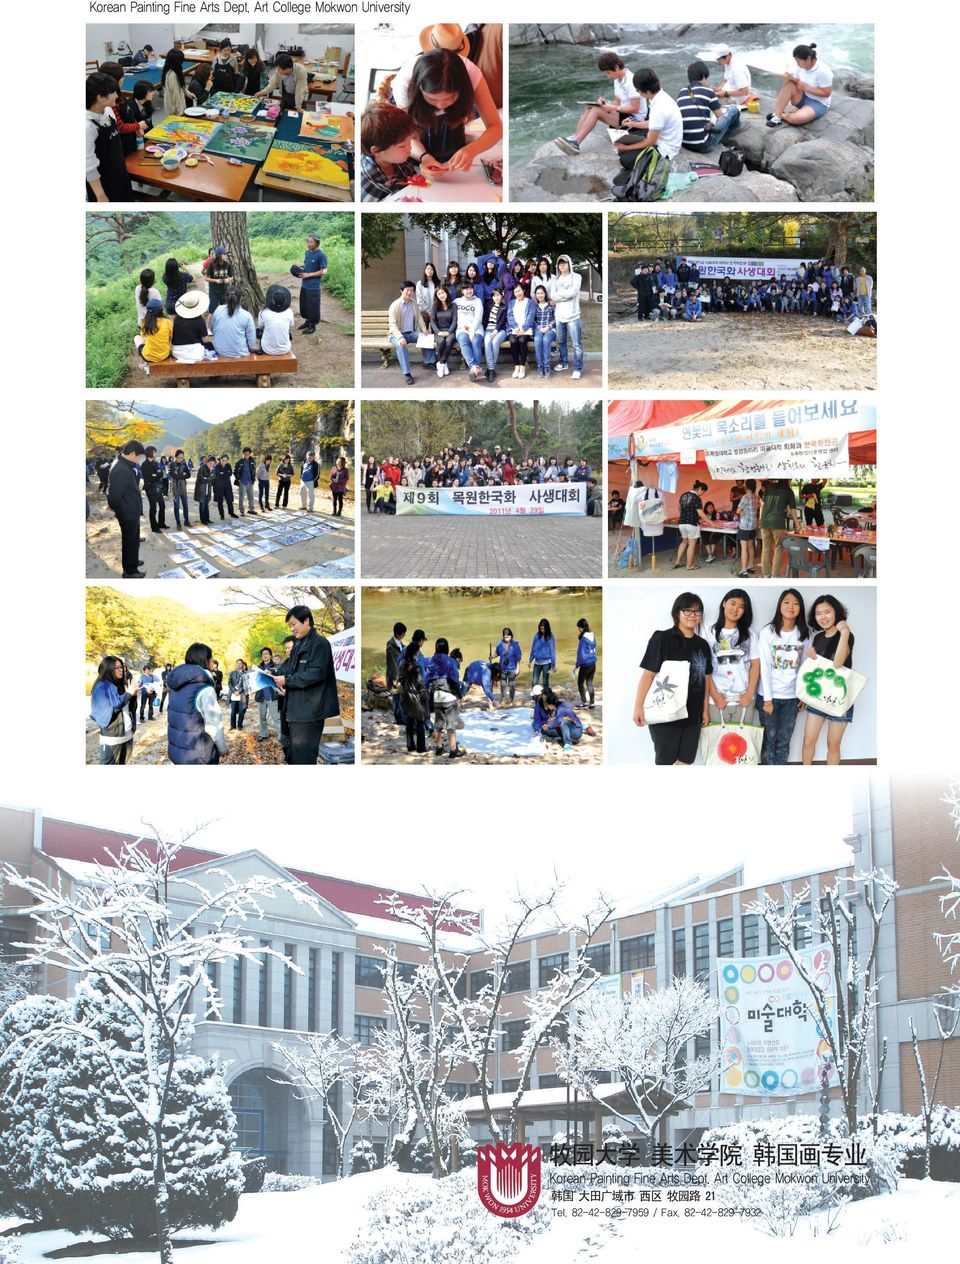 College Mokwon University Tel.